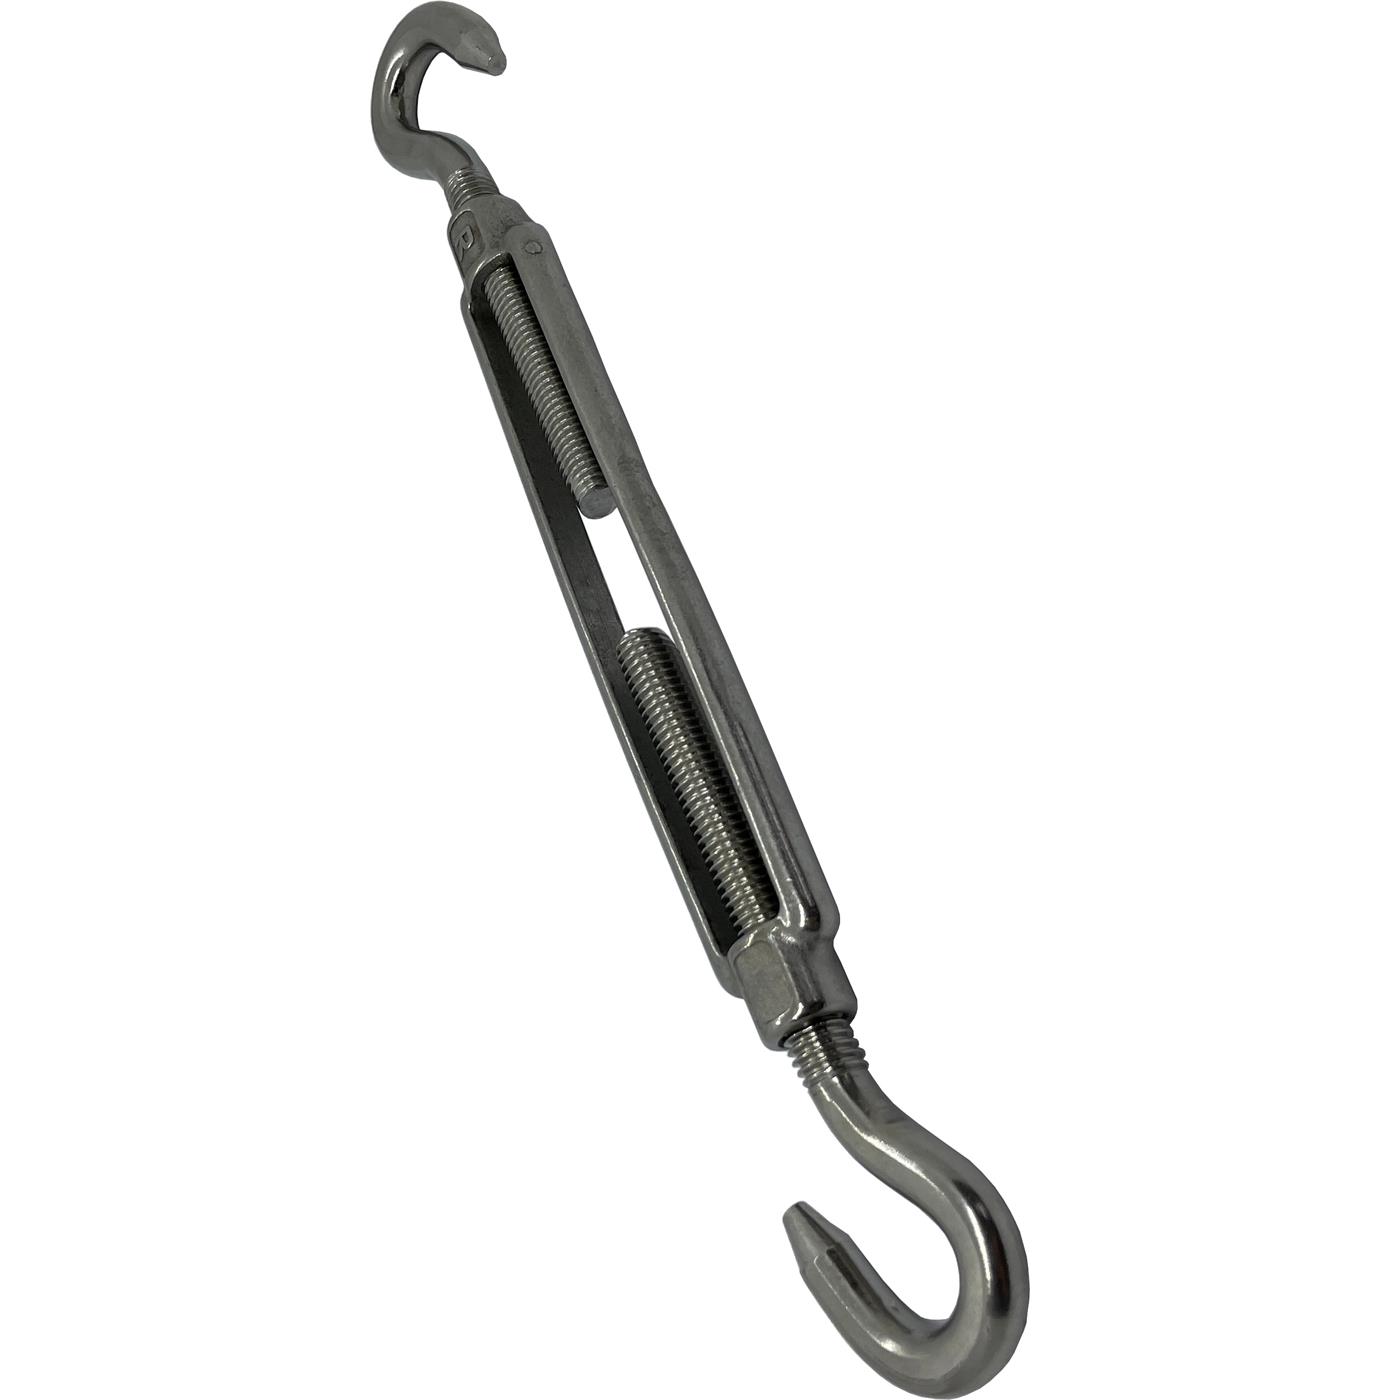 Rope tensioner Hook-Hook Stainless steel V4A 316 M12 Turnbuckle Shroud clamp